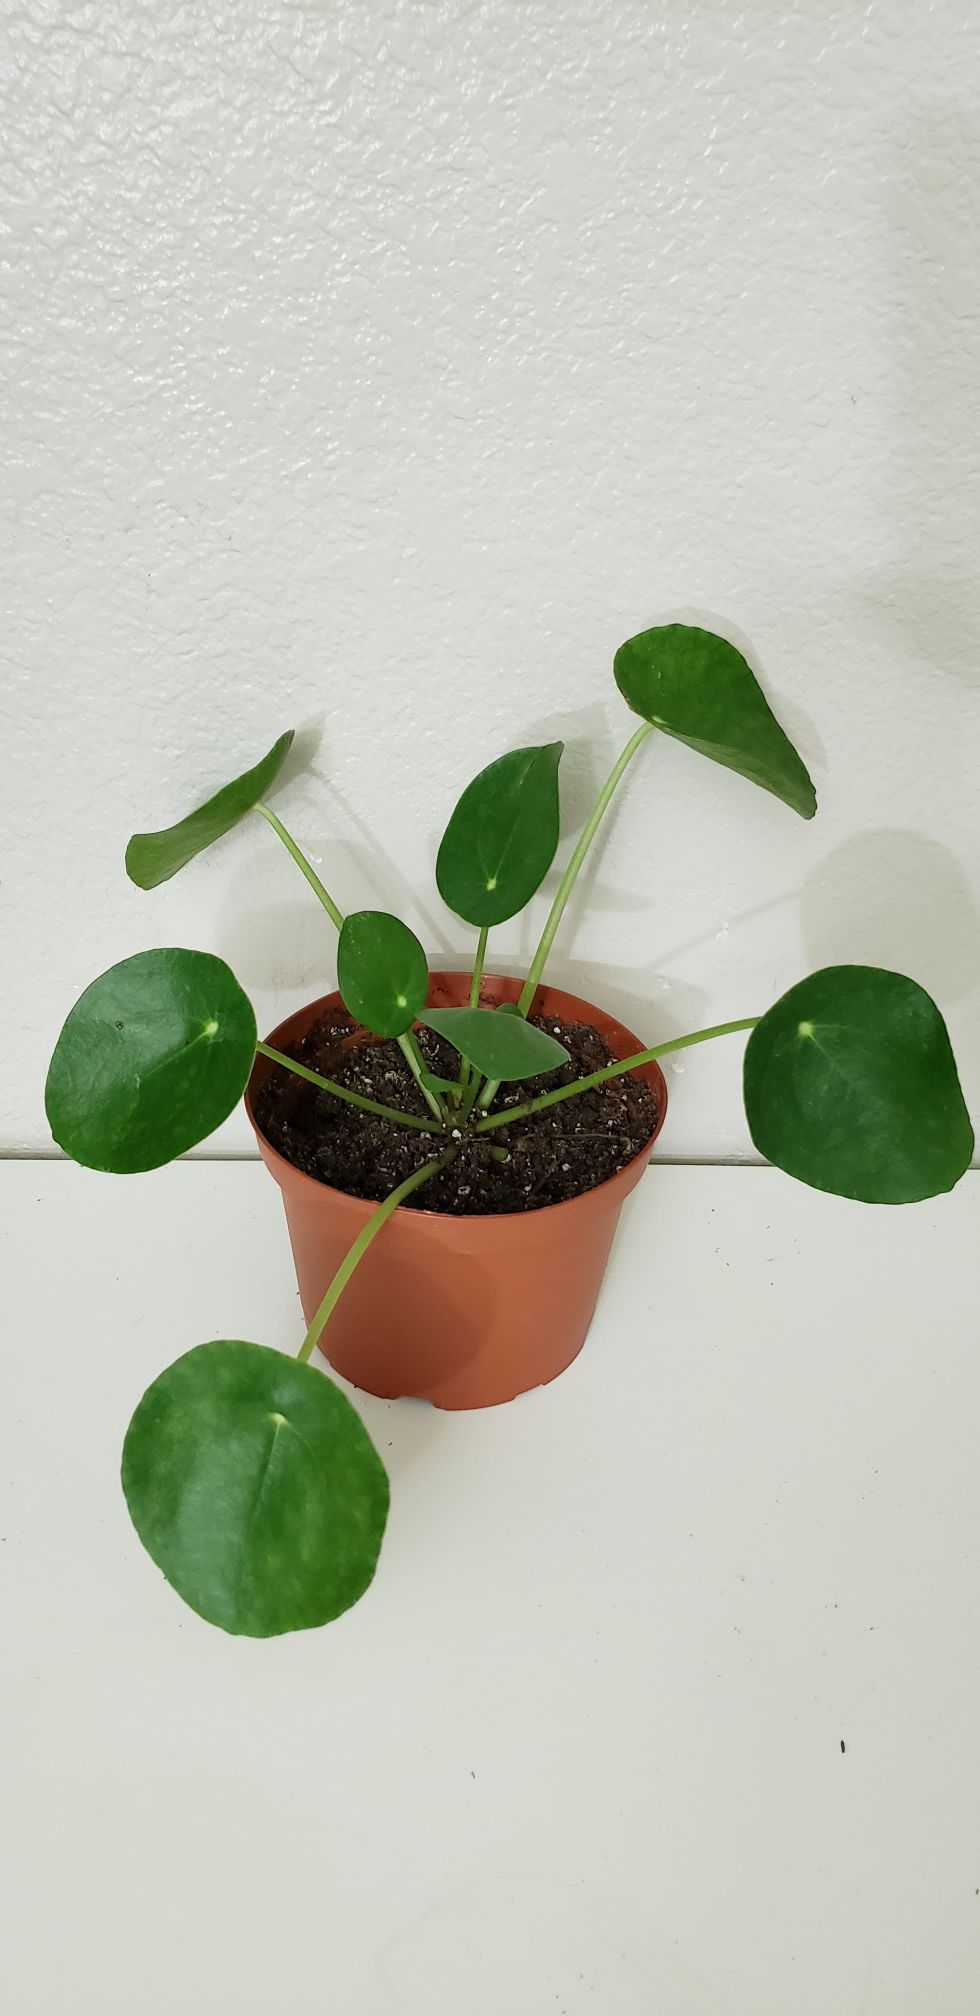 Live pilea plant in 6 inch diameter pot